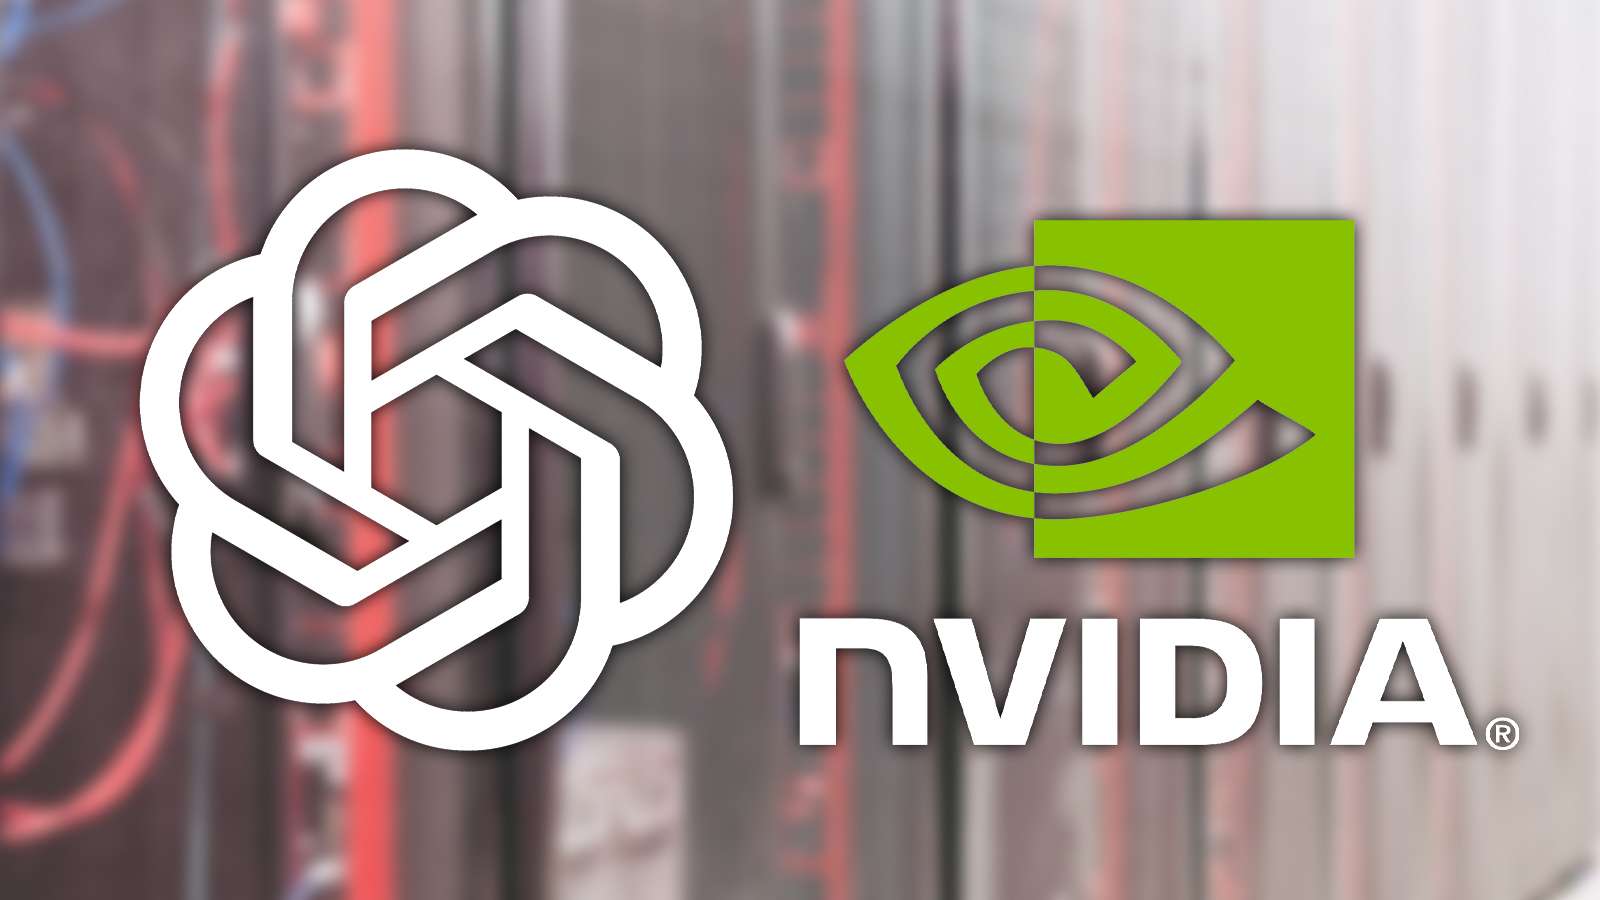 nvidia and chatgpt logos on a server rack